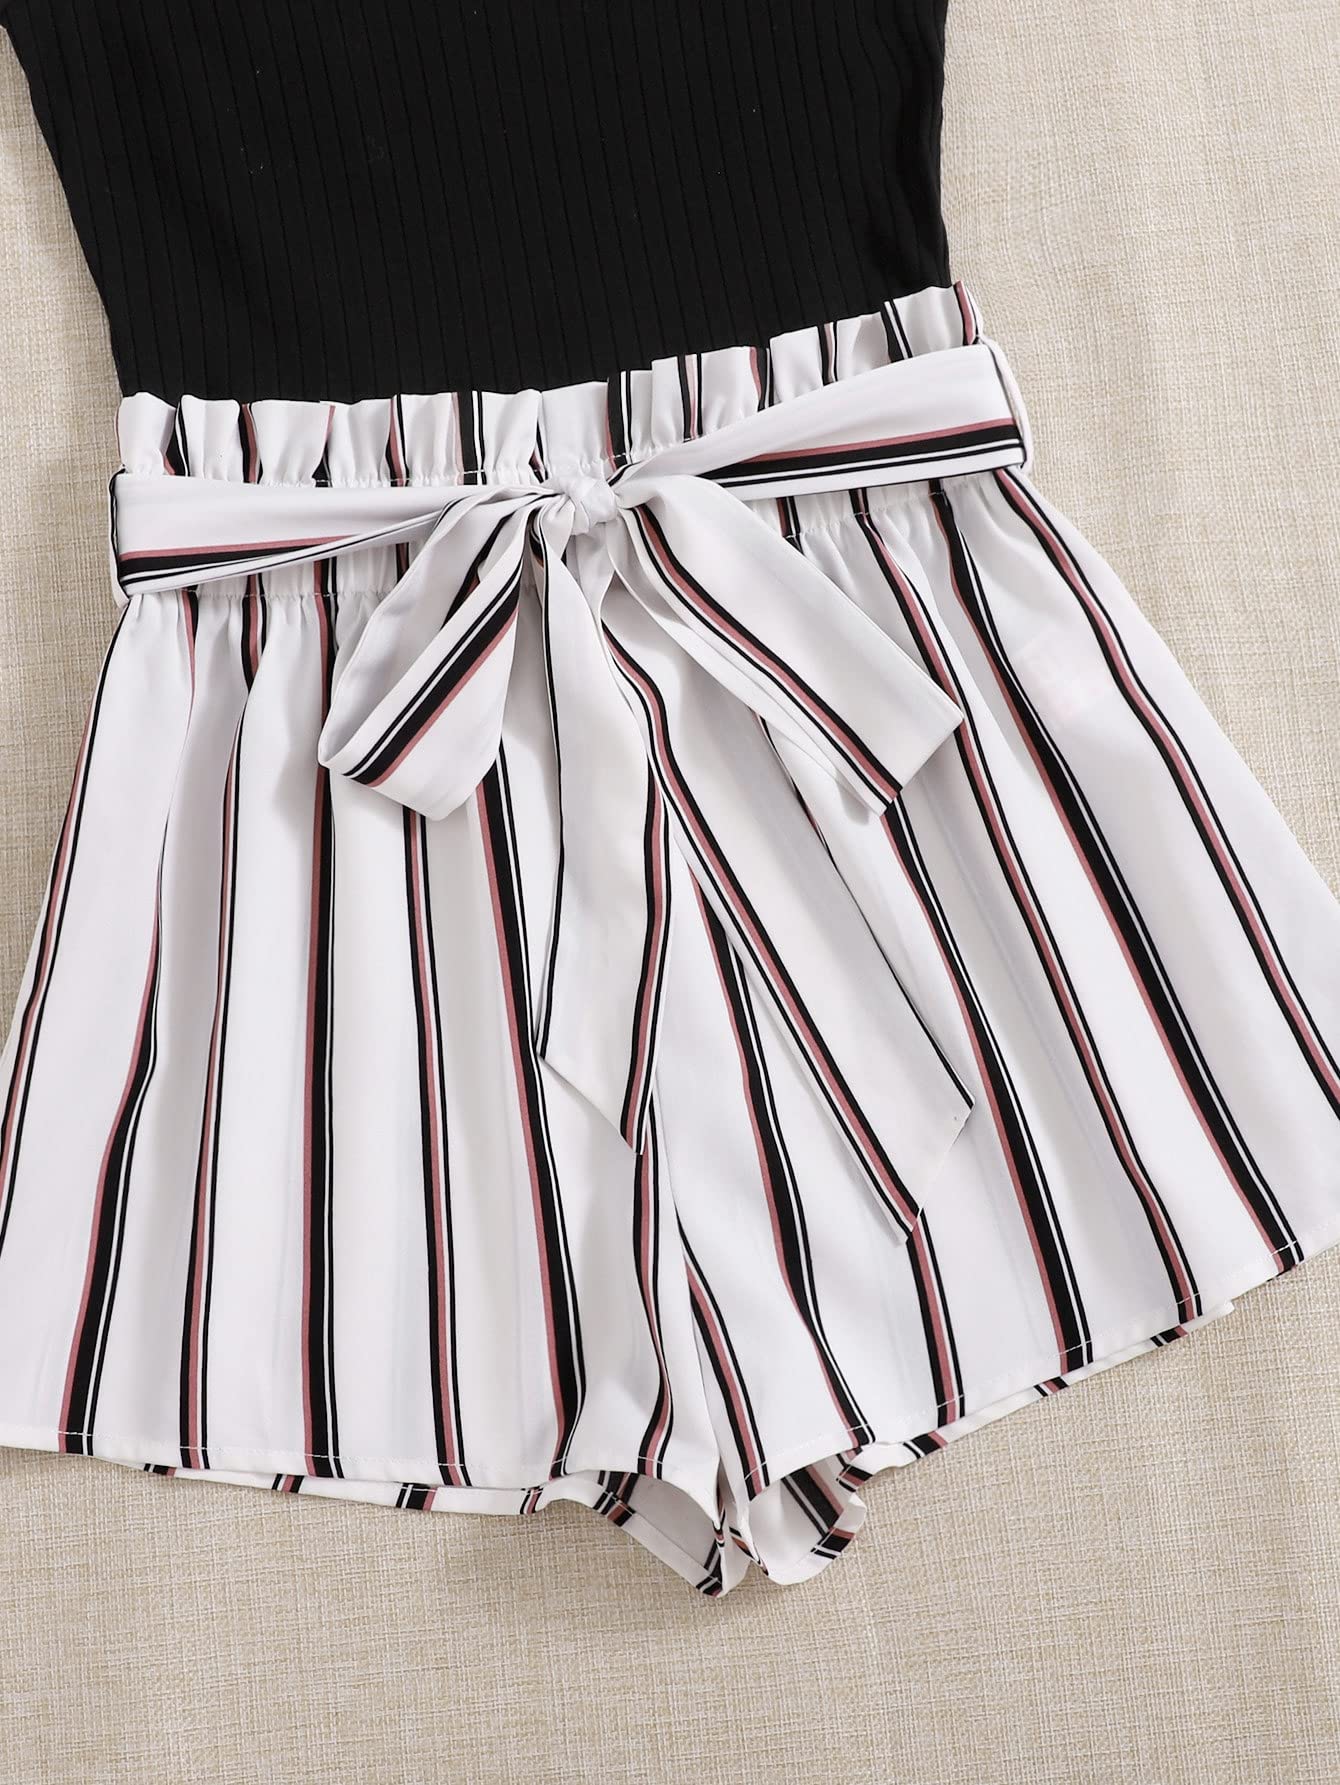 SOLY HUX Women's Summer Sleeveless Striped Belted Tank Romper Short Jumpsuit Black White XS